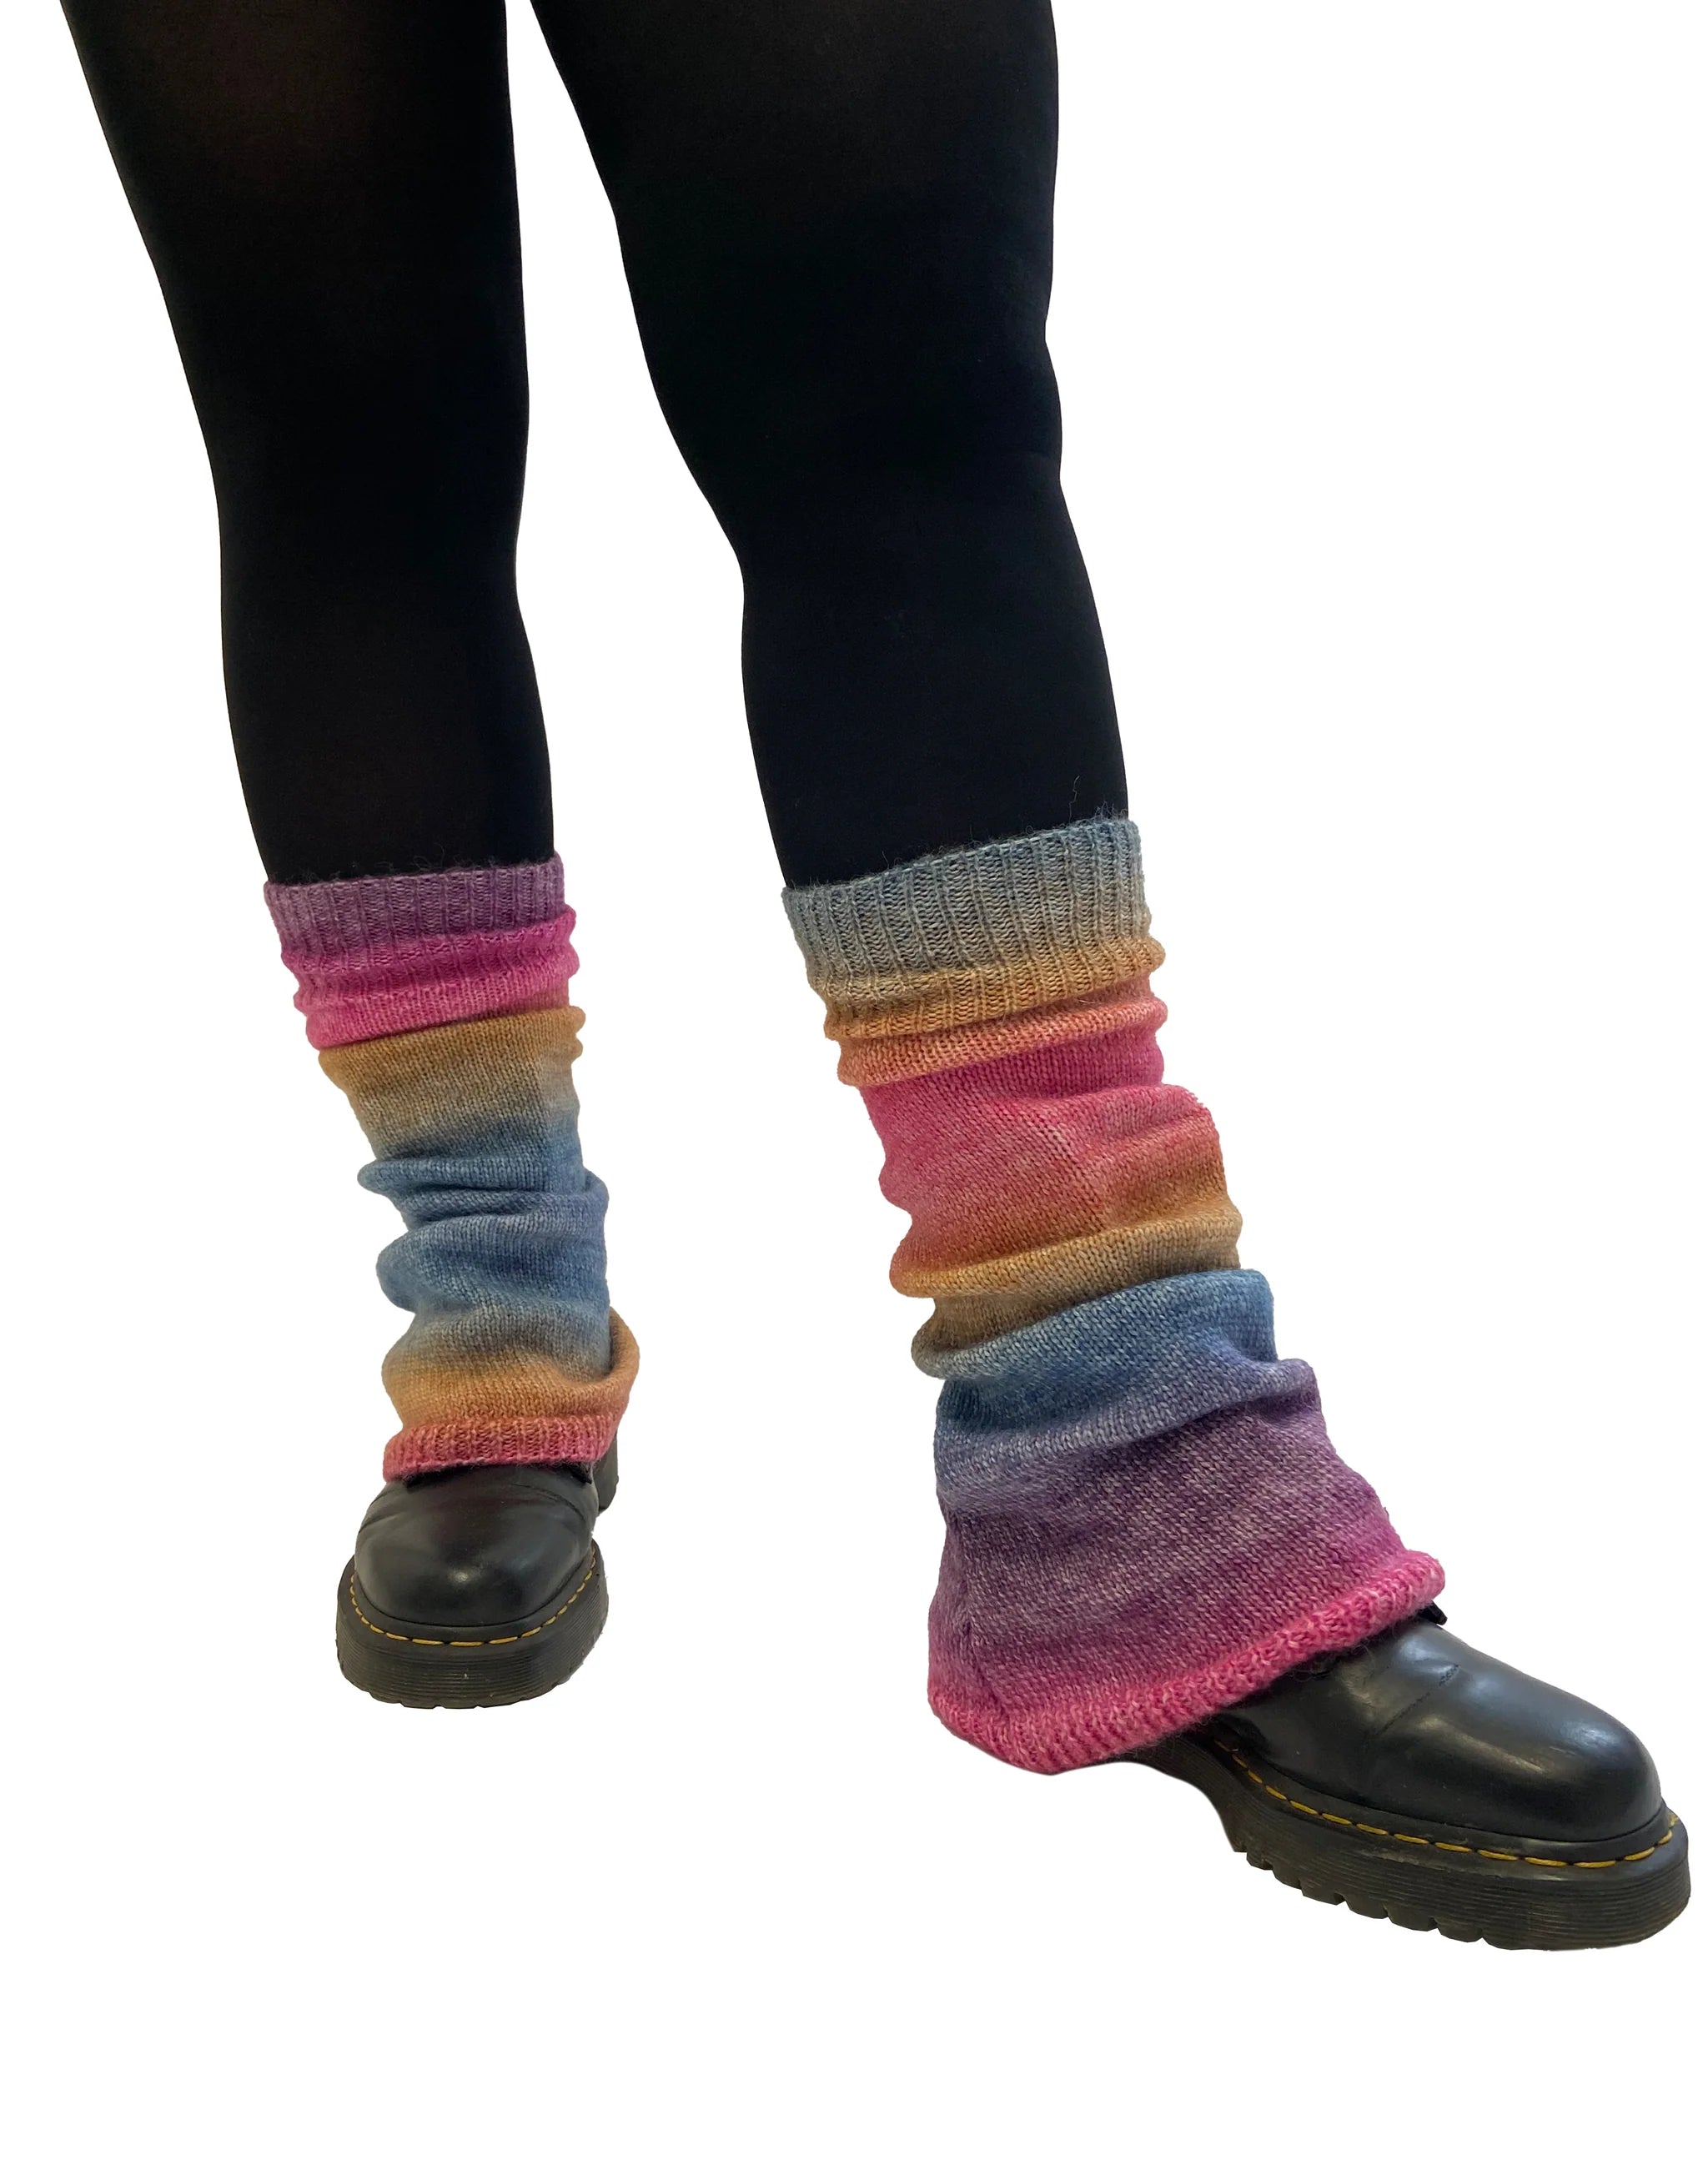 Wide Knitted Leg Warmers in Rainbow - The Sockery